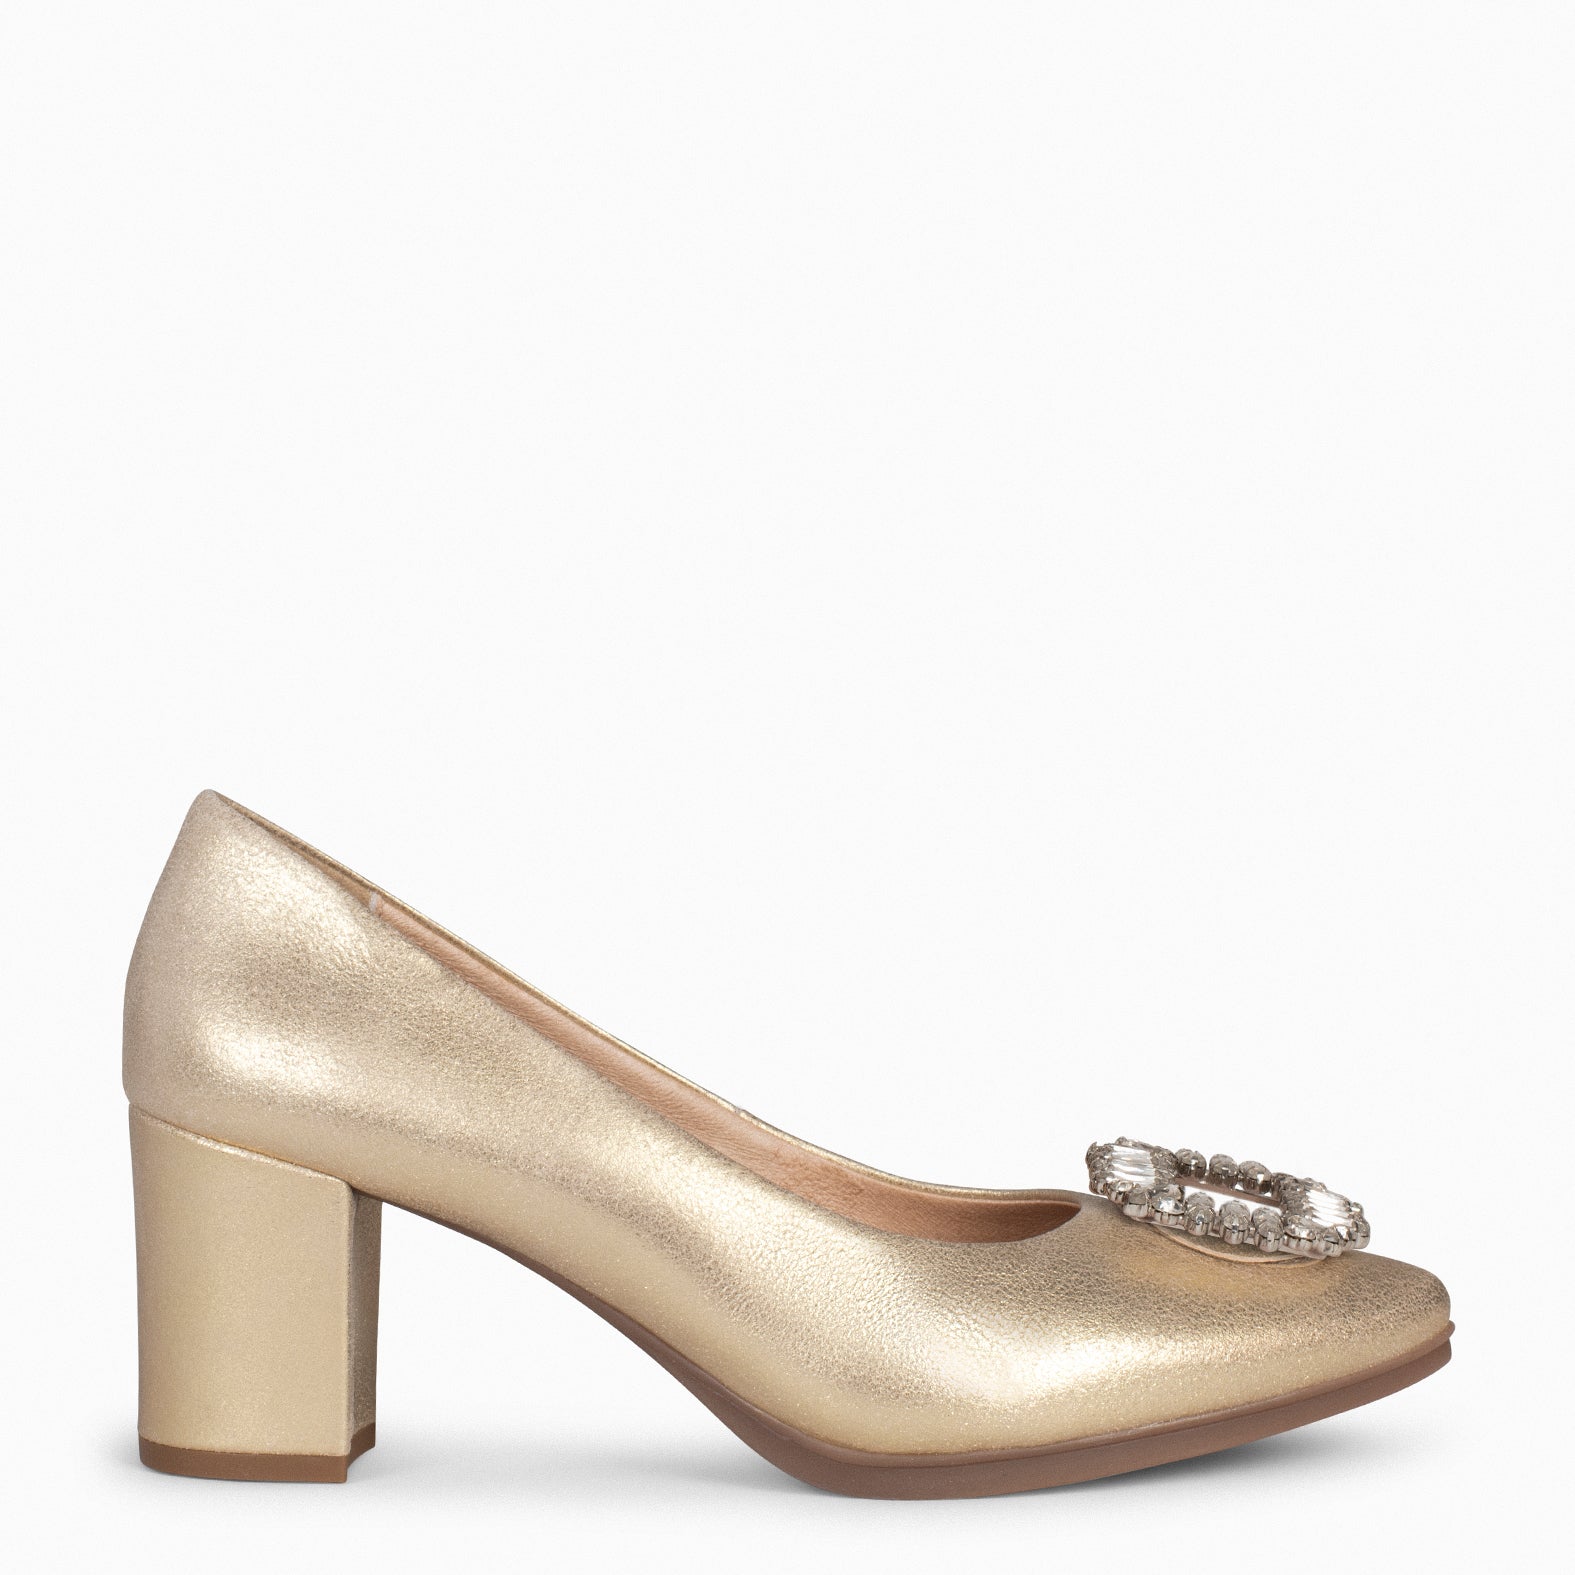 URBAN S CRYSTAL - GOLD mid heel with brooch